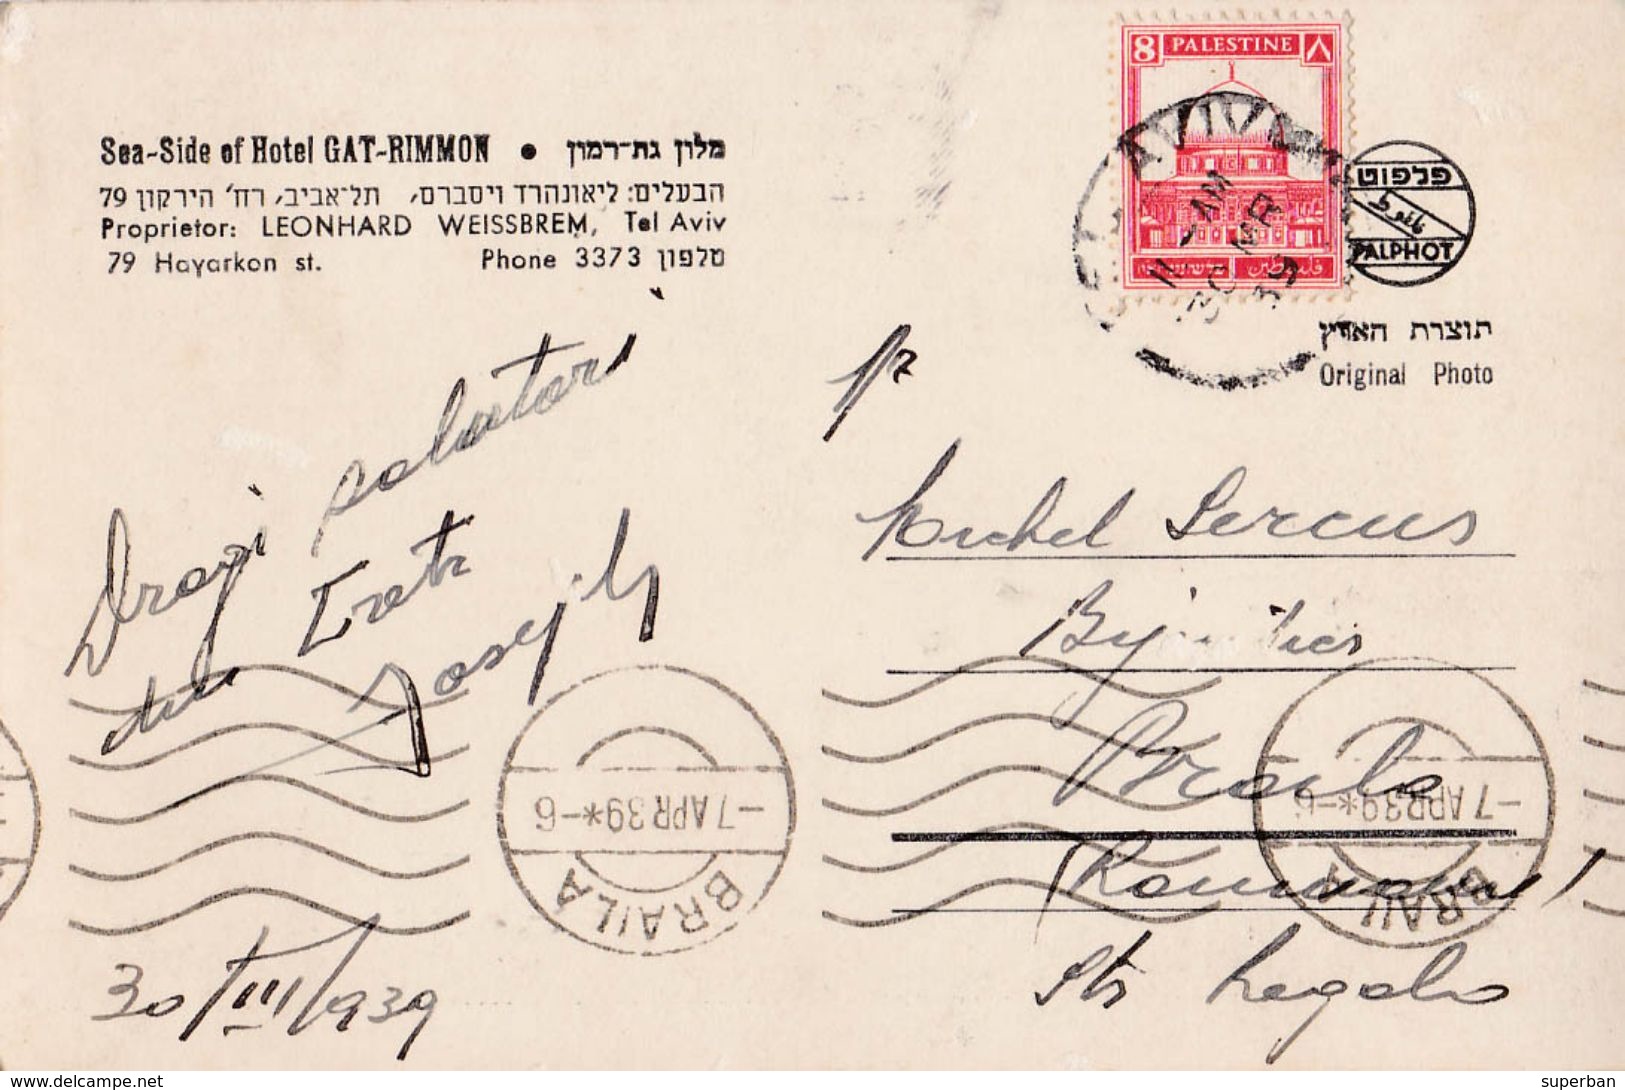 PALESTINE / ISRAEL : TEL AVIV : HOTEL GAT-RIMMON - CARTE VRAIE PHOTO / REAL PHOTO ~ 1935 - '39 - RARE !!! (w-483) - Israël